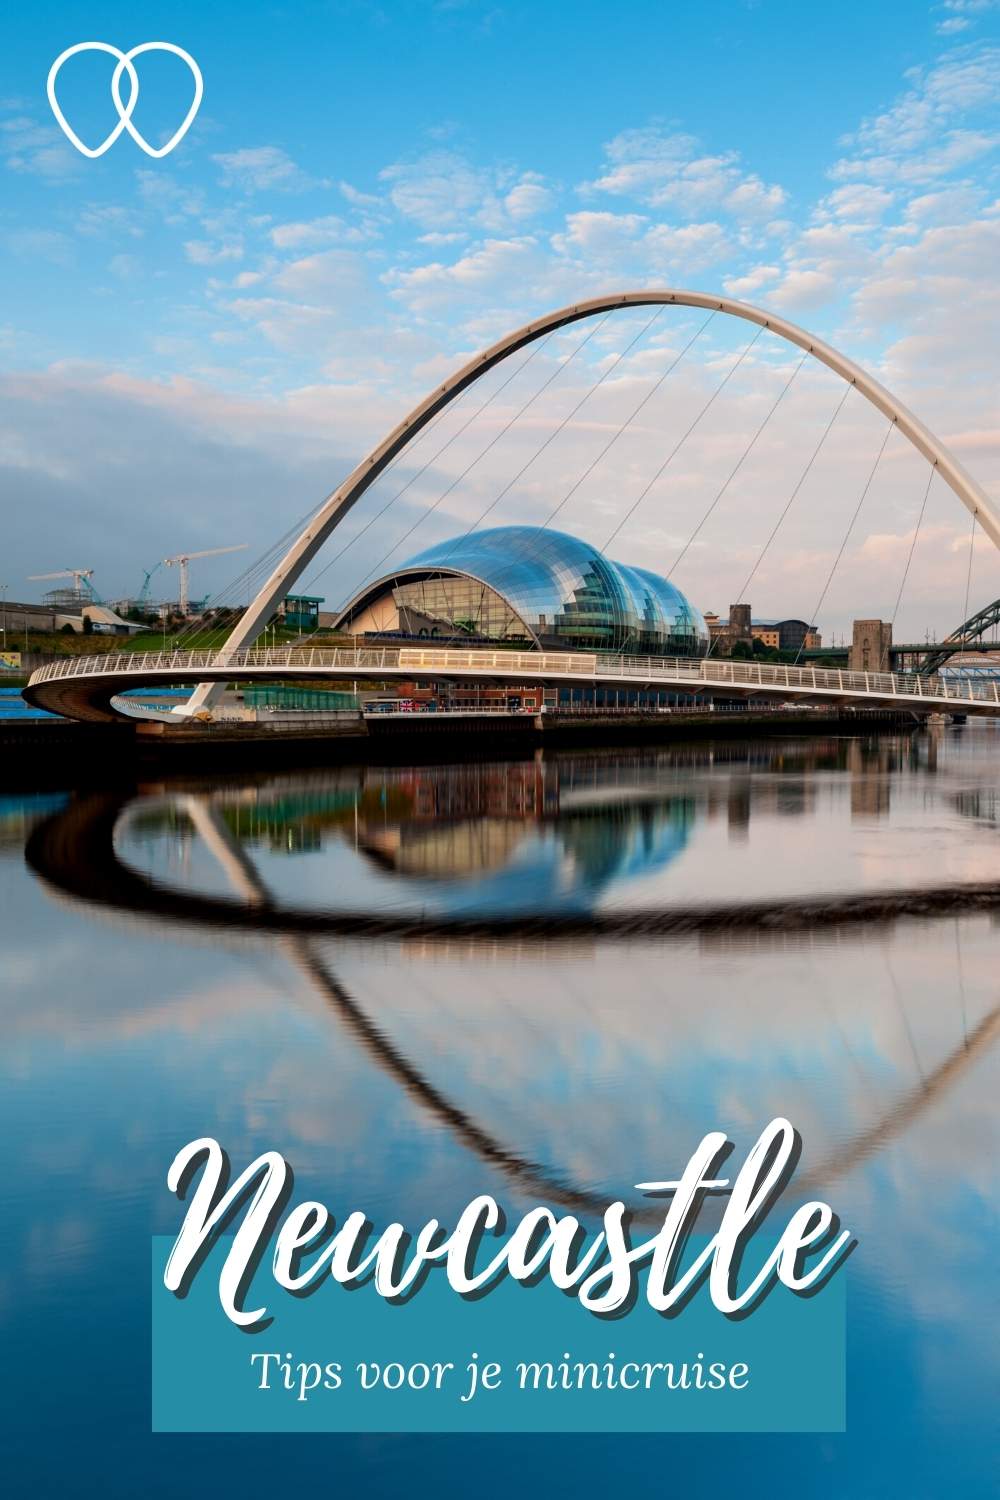 Minicruise Newcastle, de leukste tips voor je stedentrip Newcastle